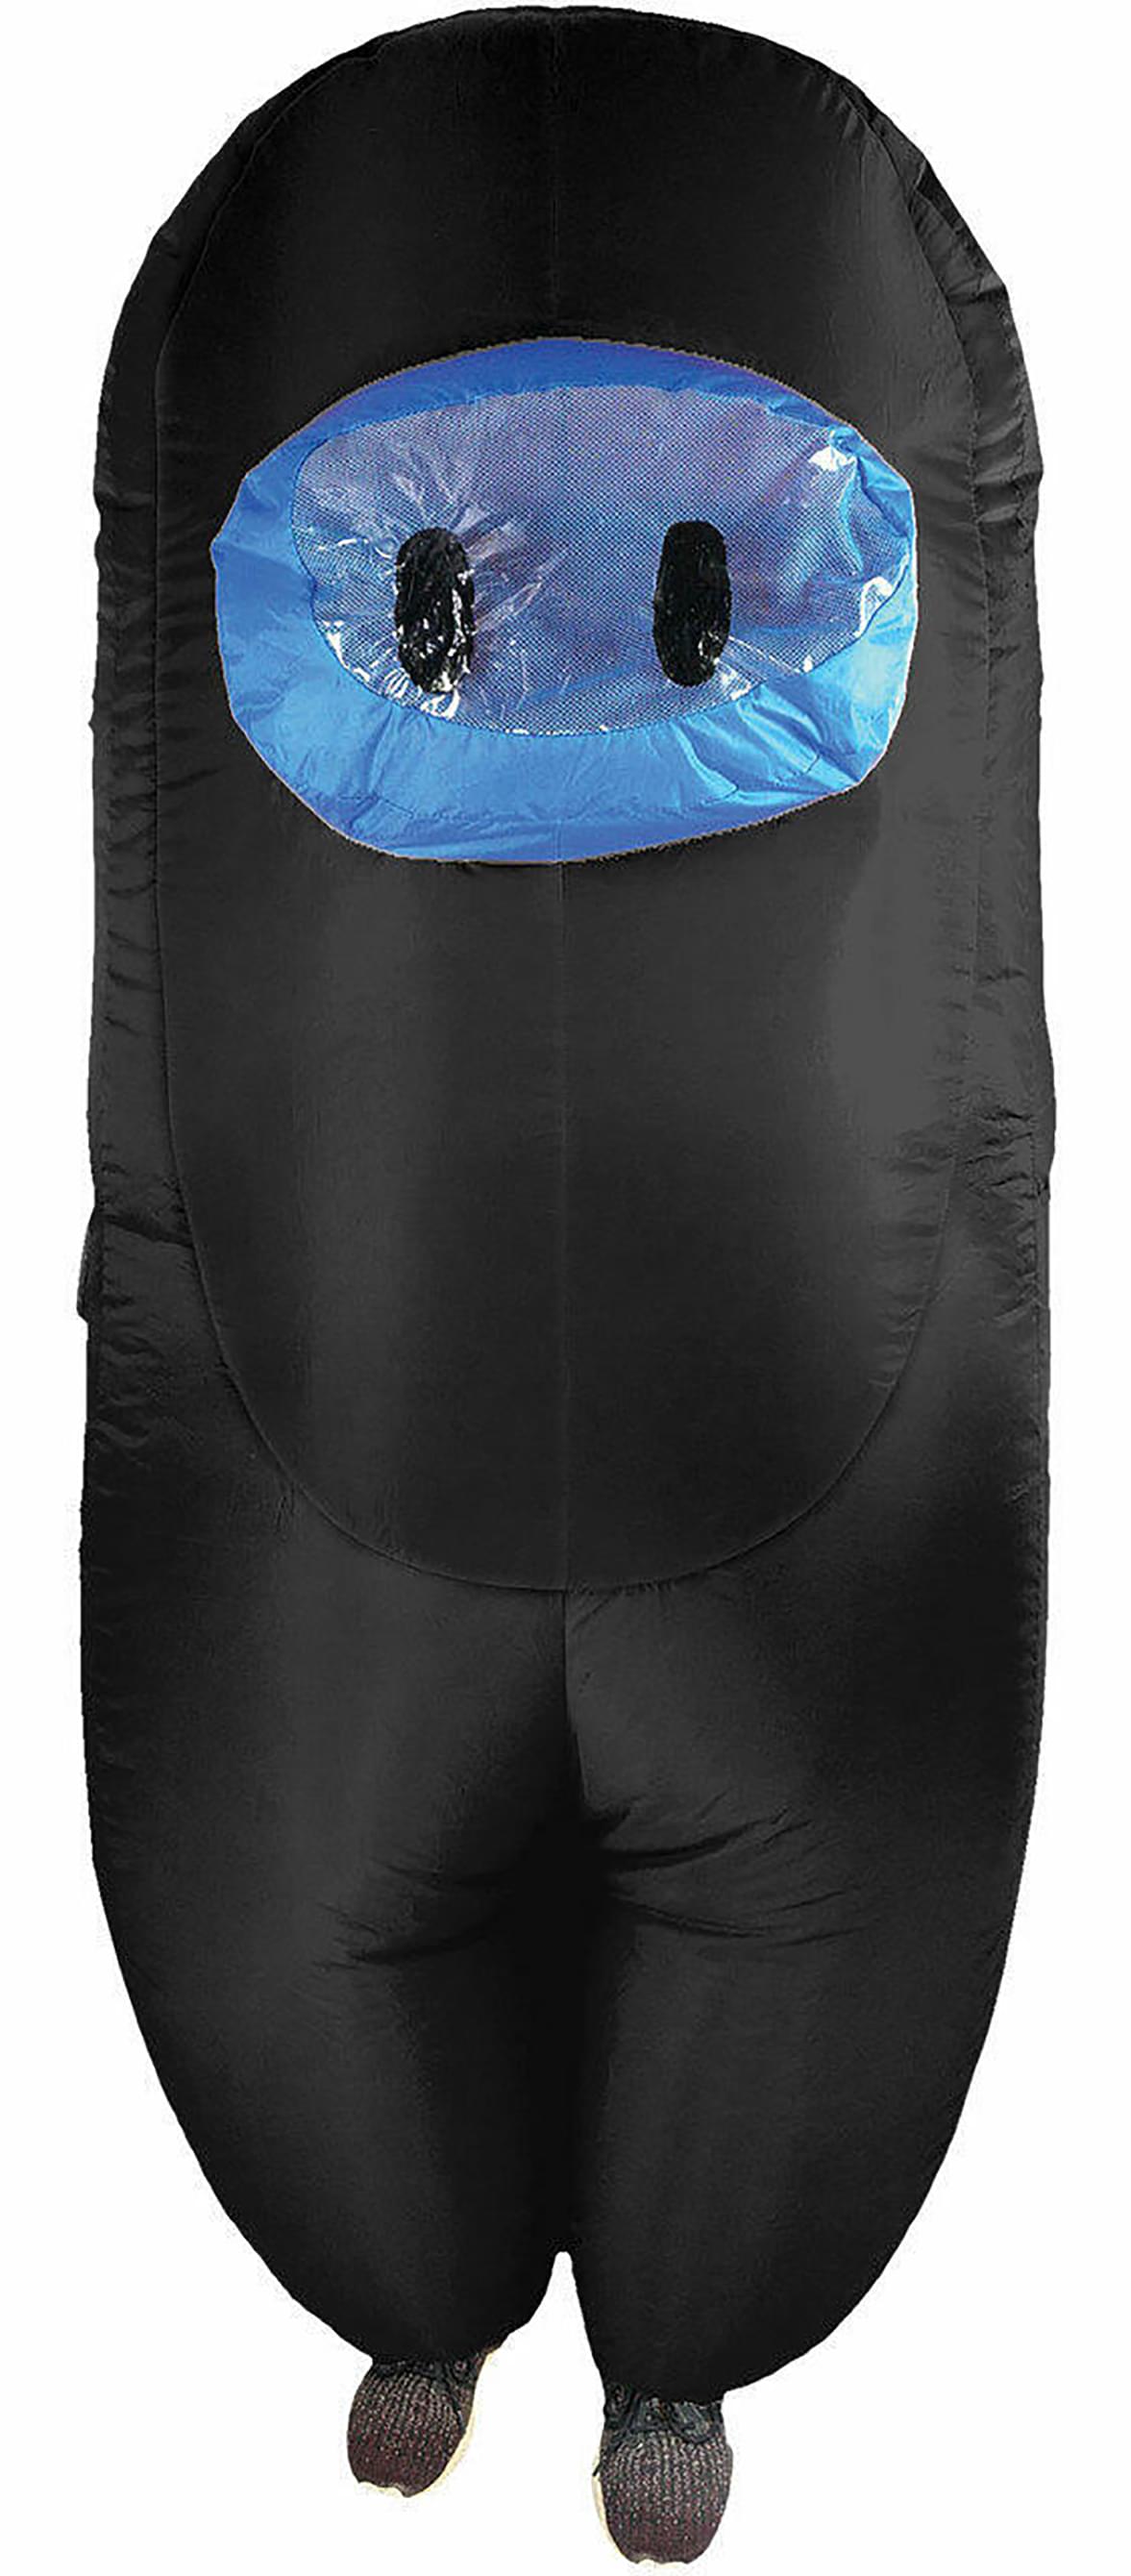 Black Imposter Inflatable Adult Costume , Standard